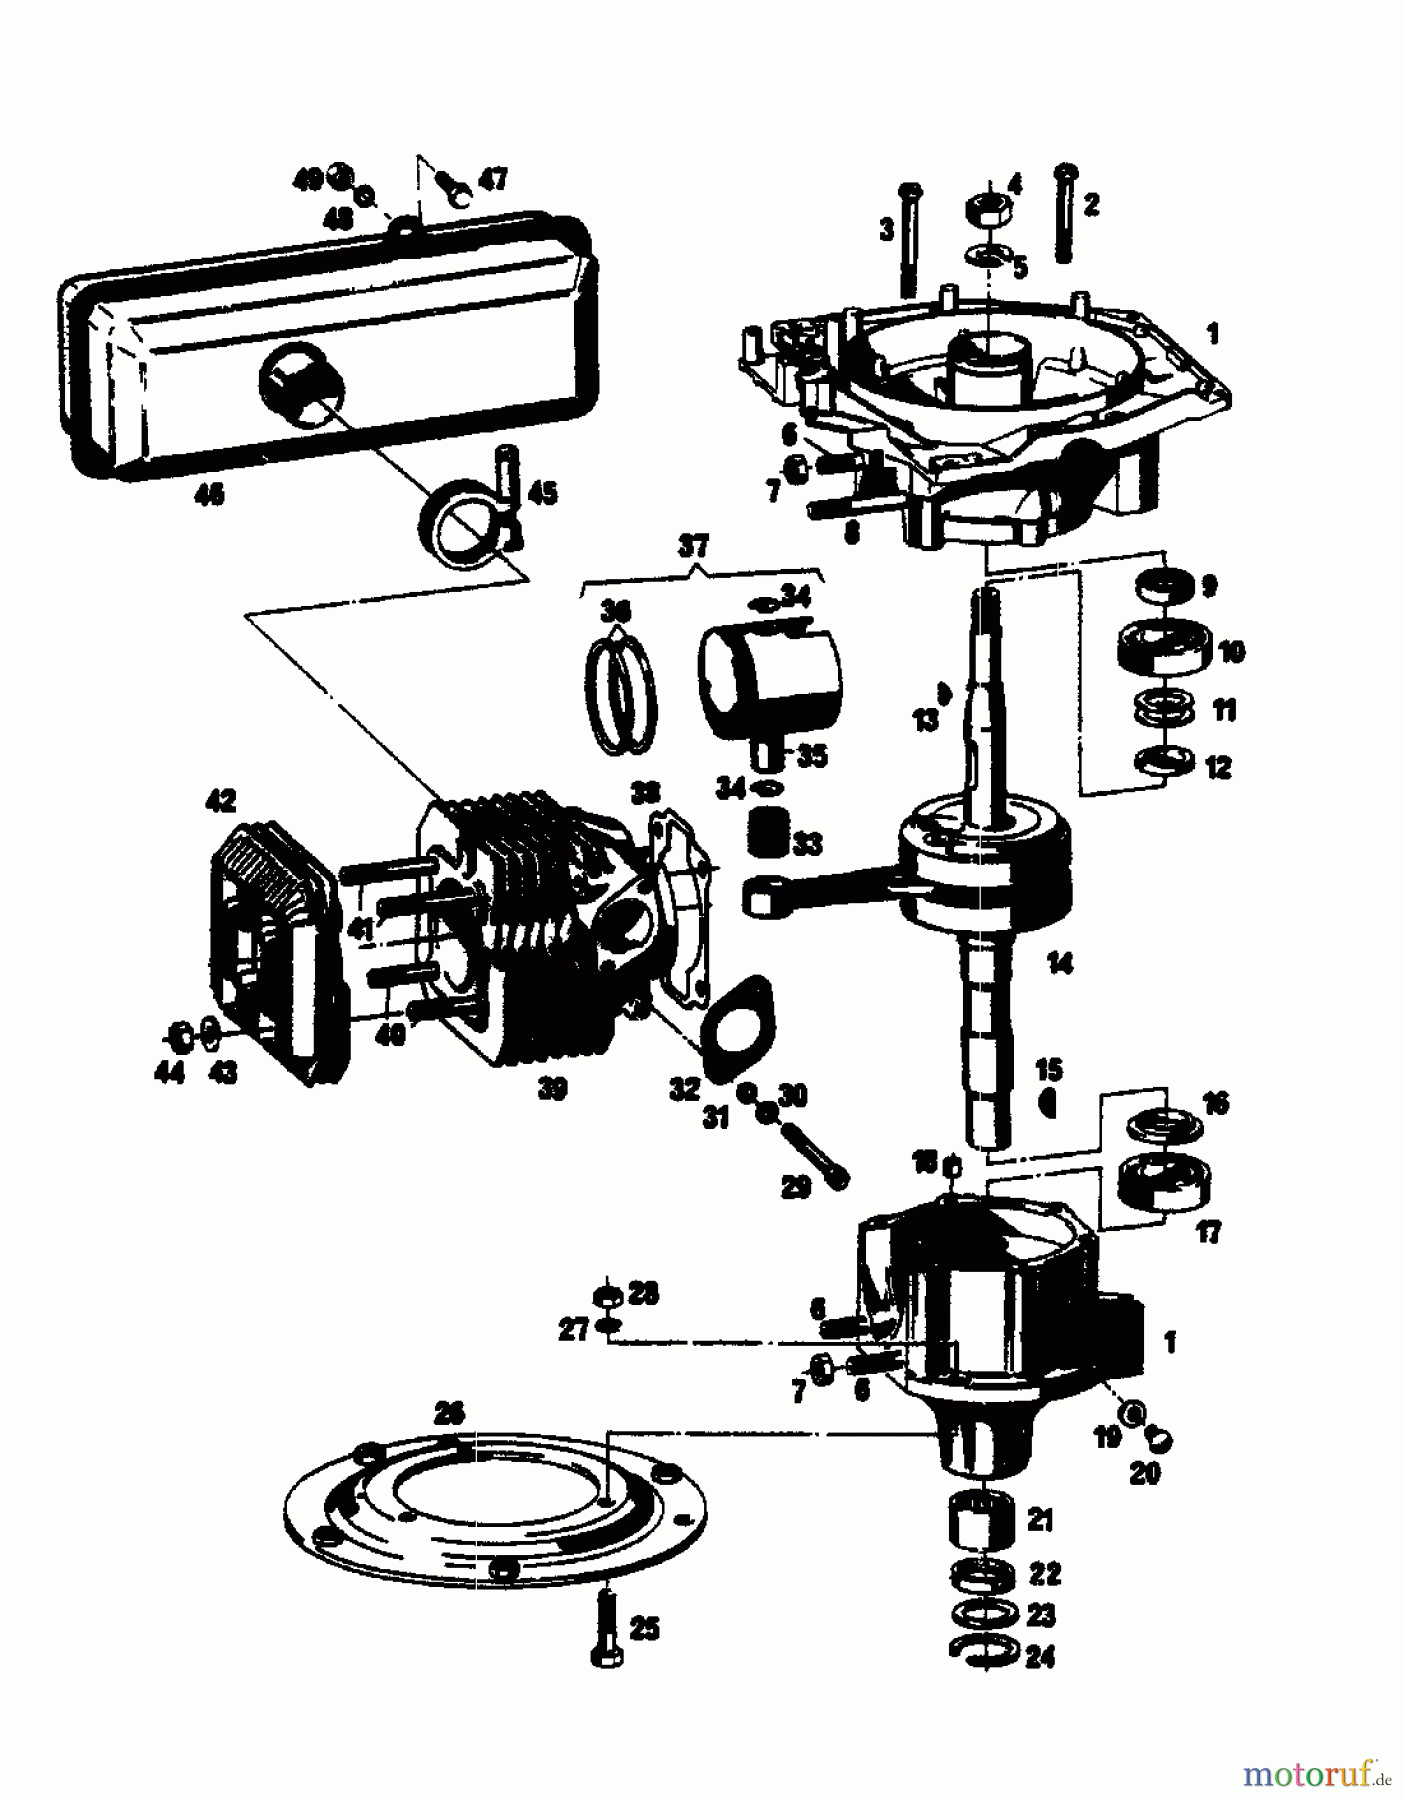  Gutbrod Motormäher mit Antrieb SB 51 R 02608.04  (1989) Kurbelgehäuse, Zylinder